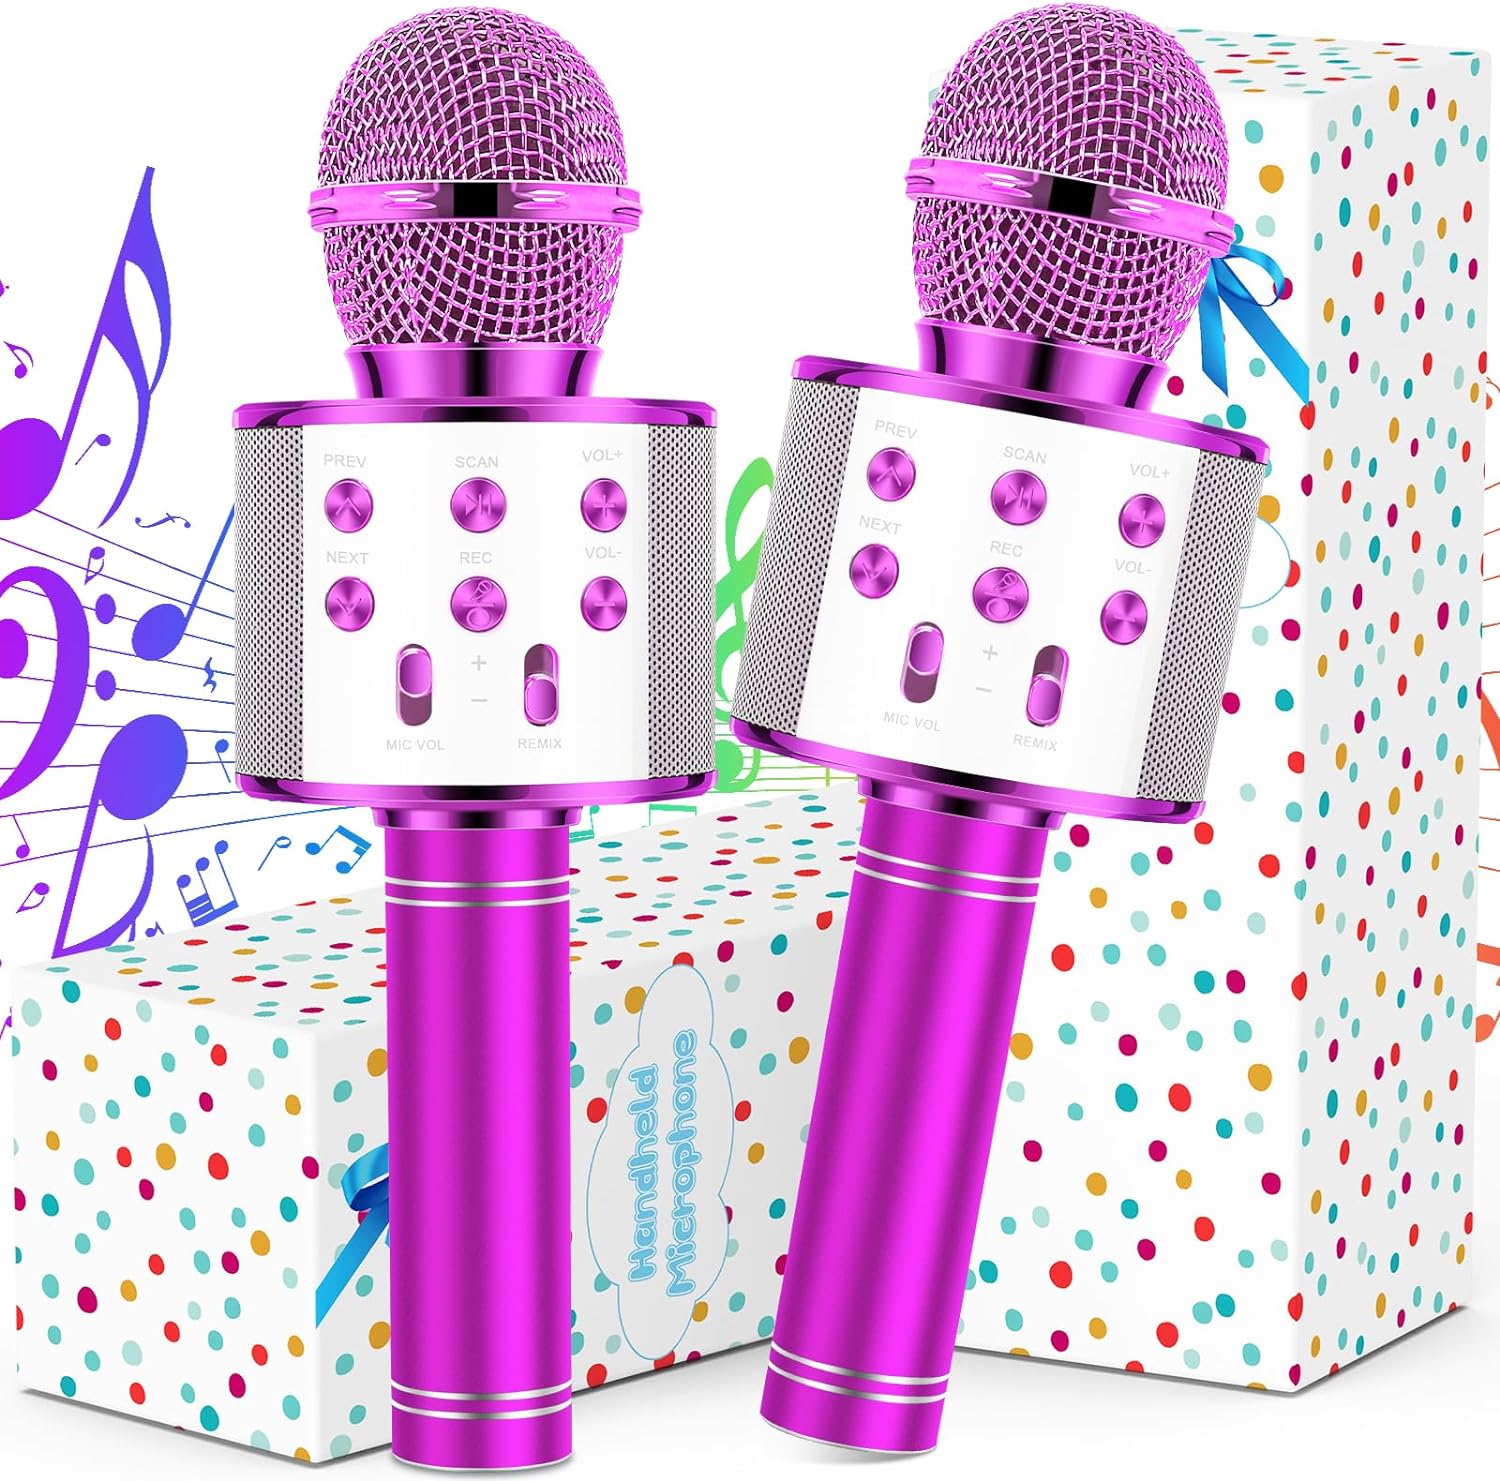 Handheld Microphones Wireless & Speaker with Voice Changers Echo Volume Recording Function, 2 Pack, Pink